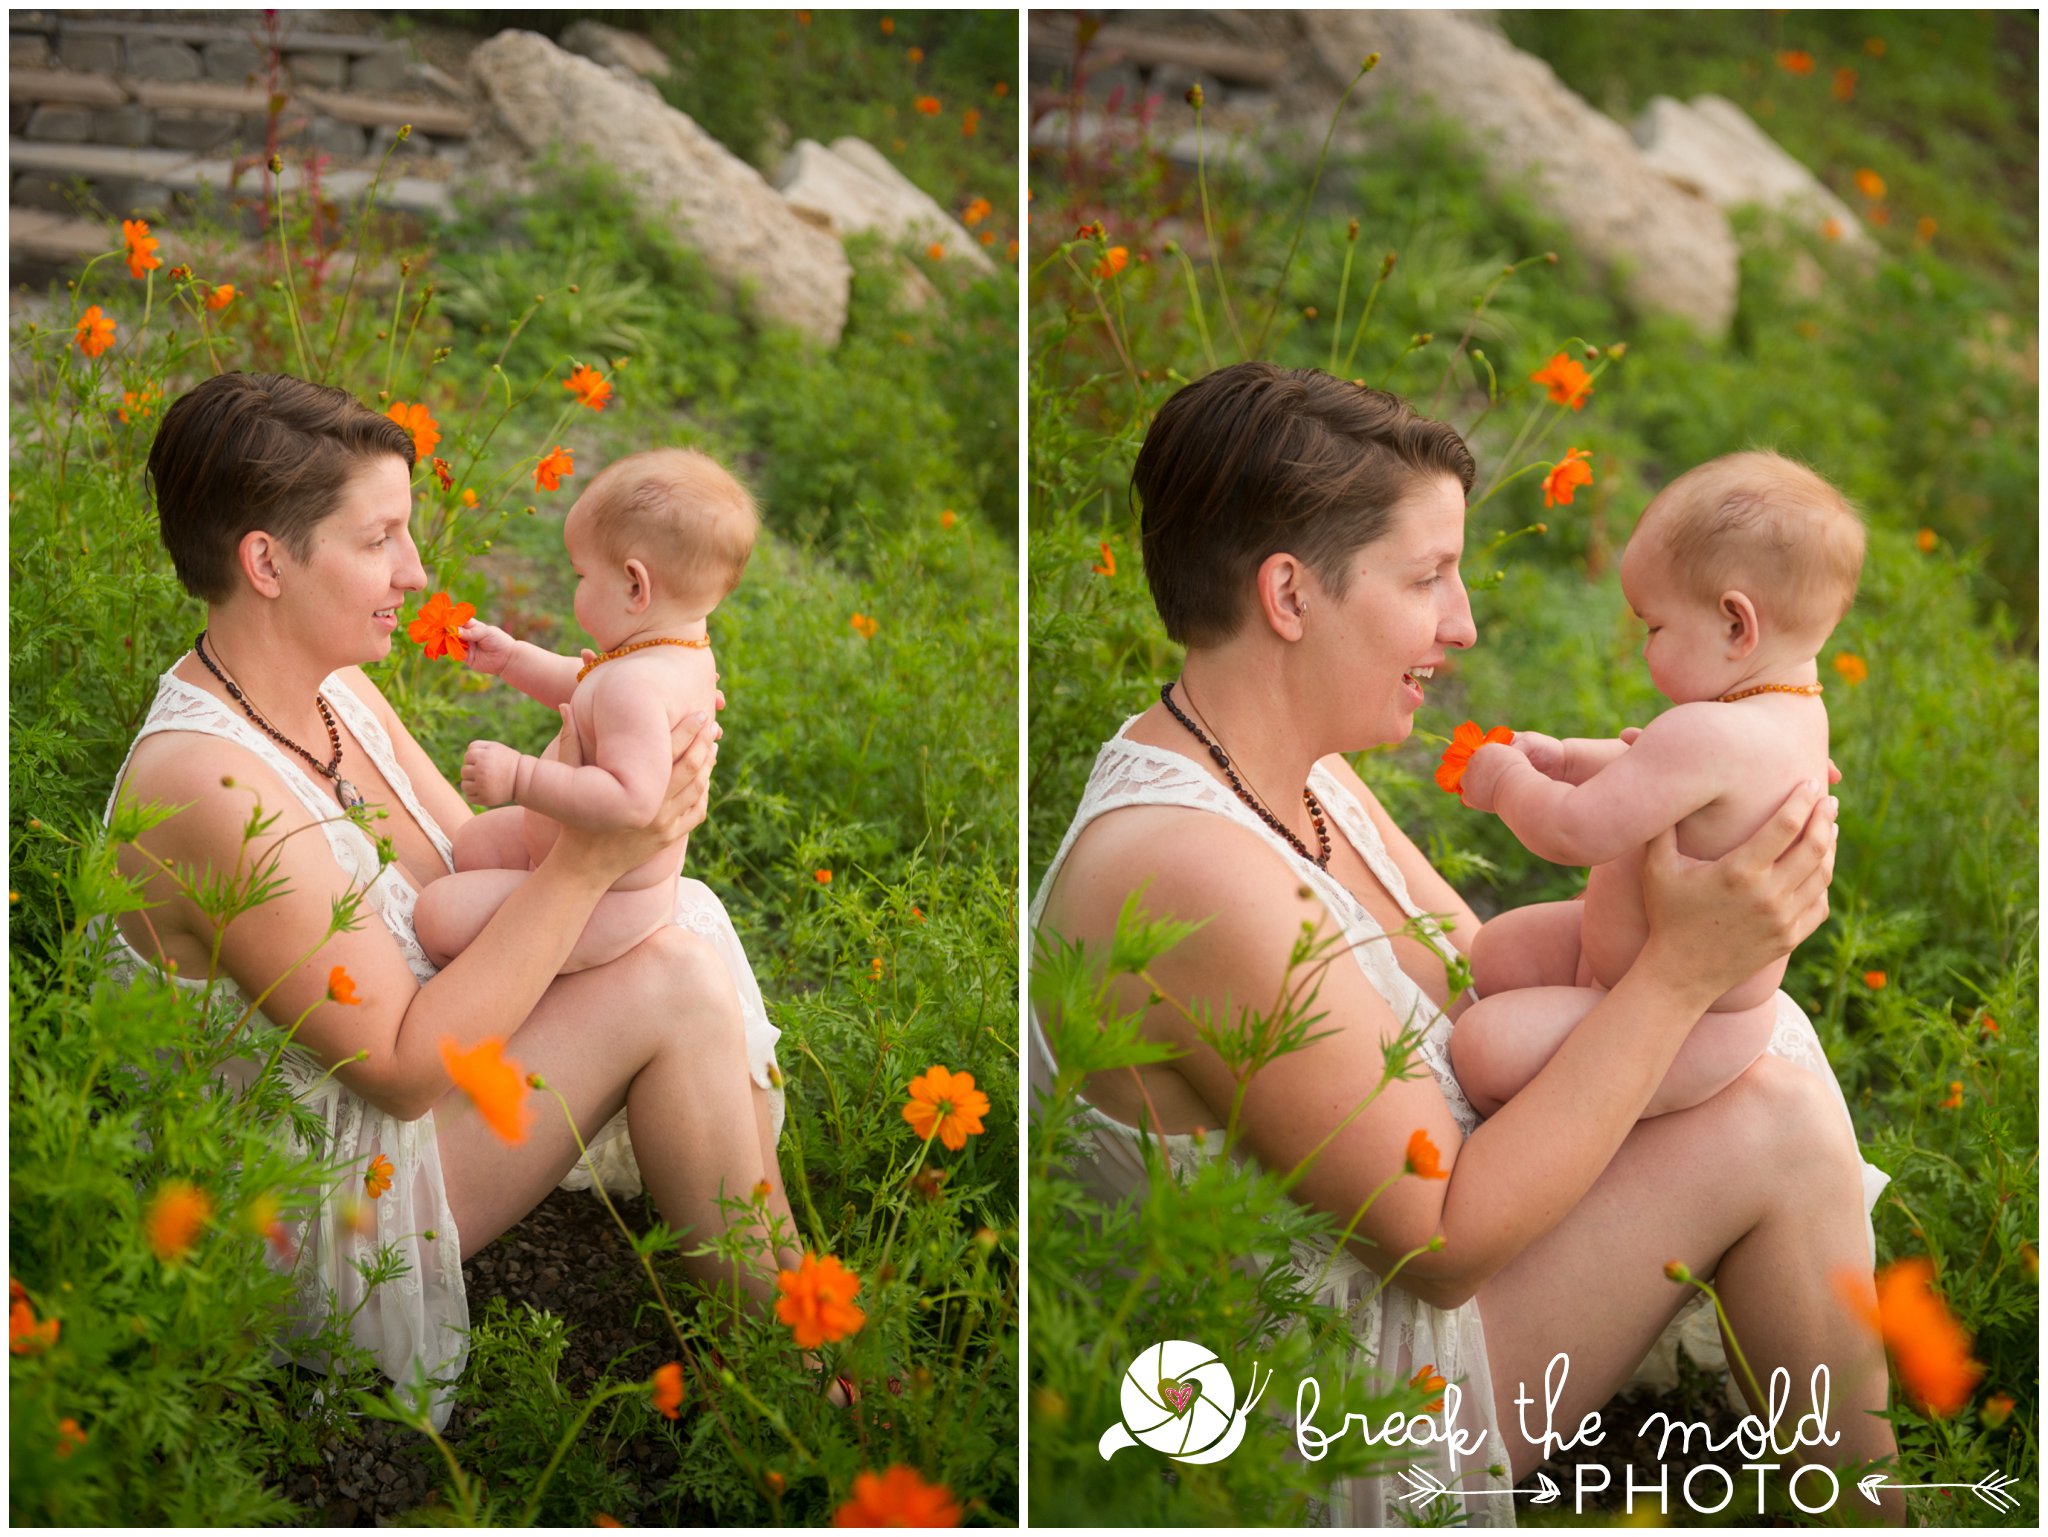 break-the-mold-photo-nursing-breastfeeding-session-womens-beauty-woman-body-nurse-breastfed (13).jpg